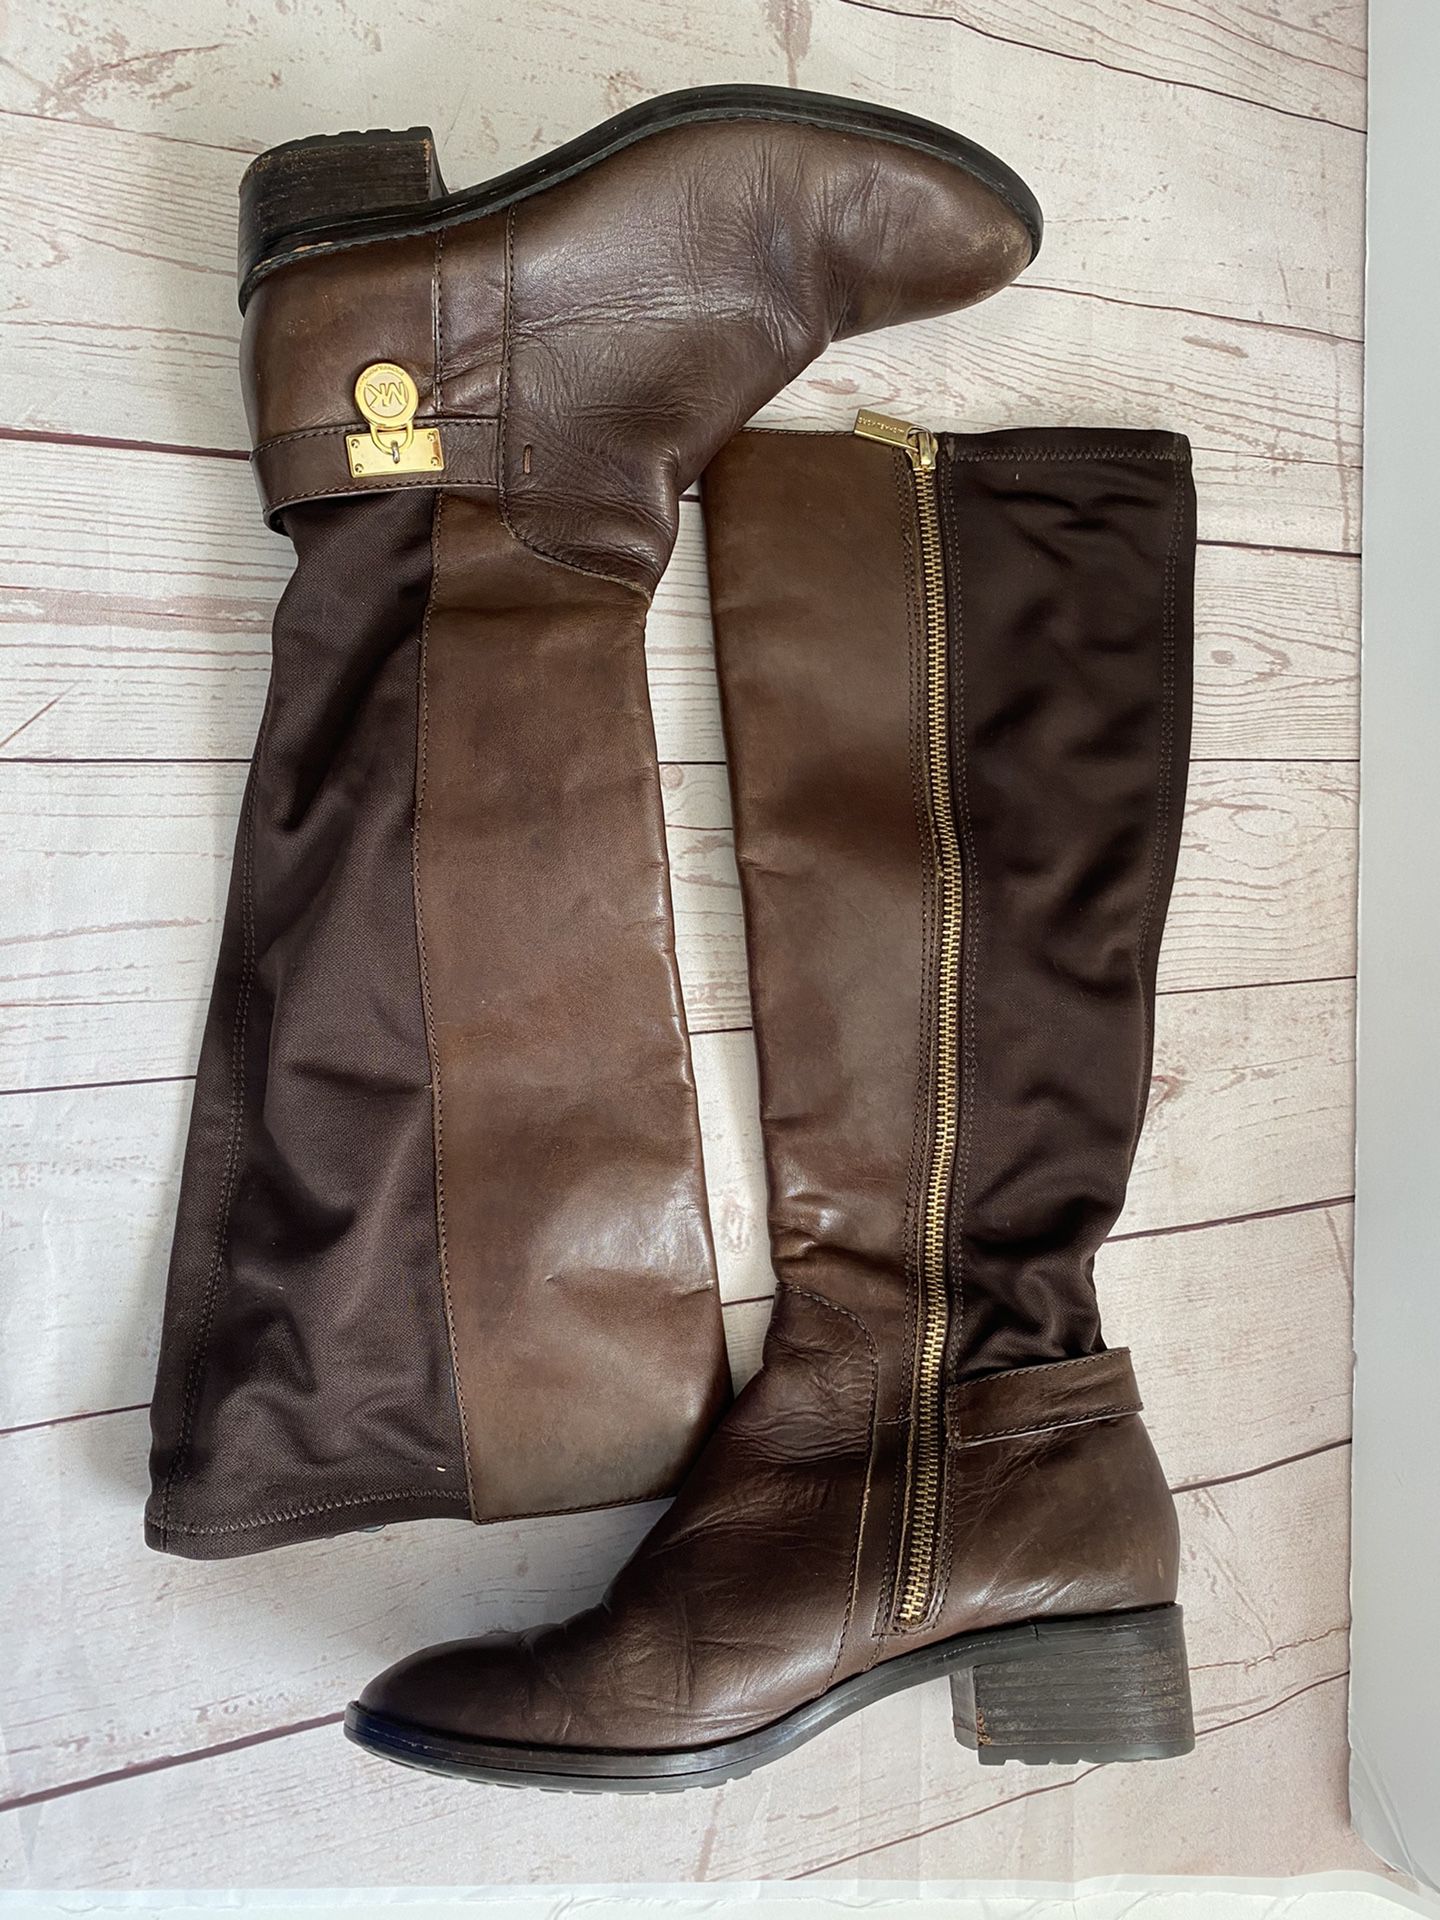 Michael kors women’s boots brown size 8M